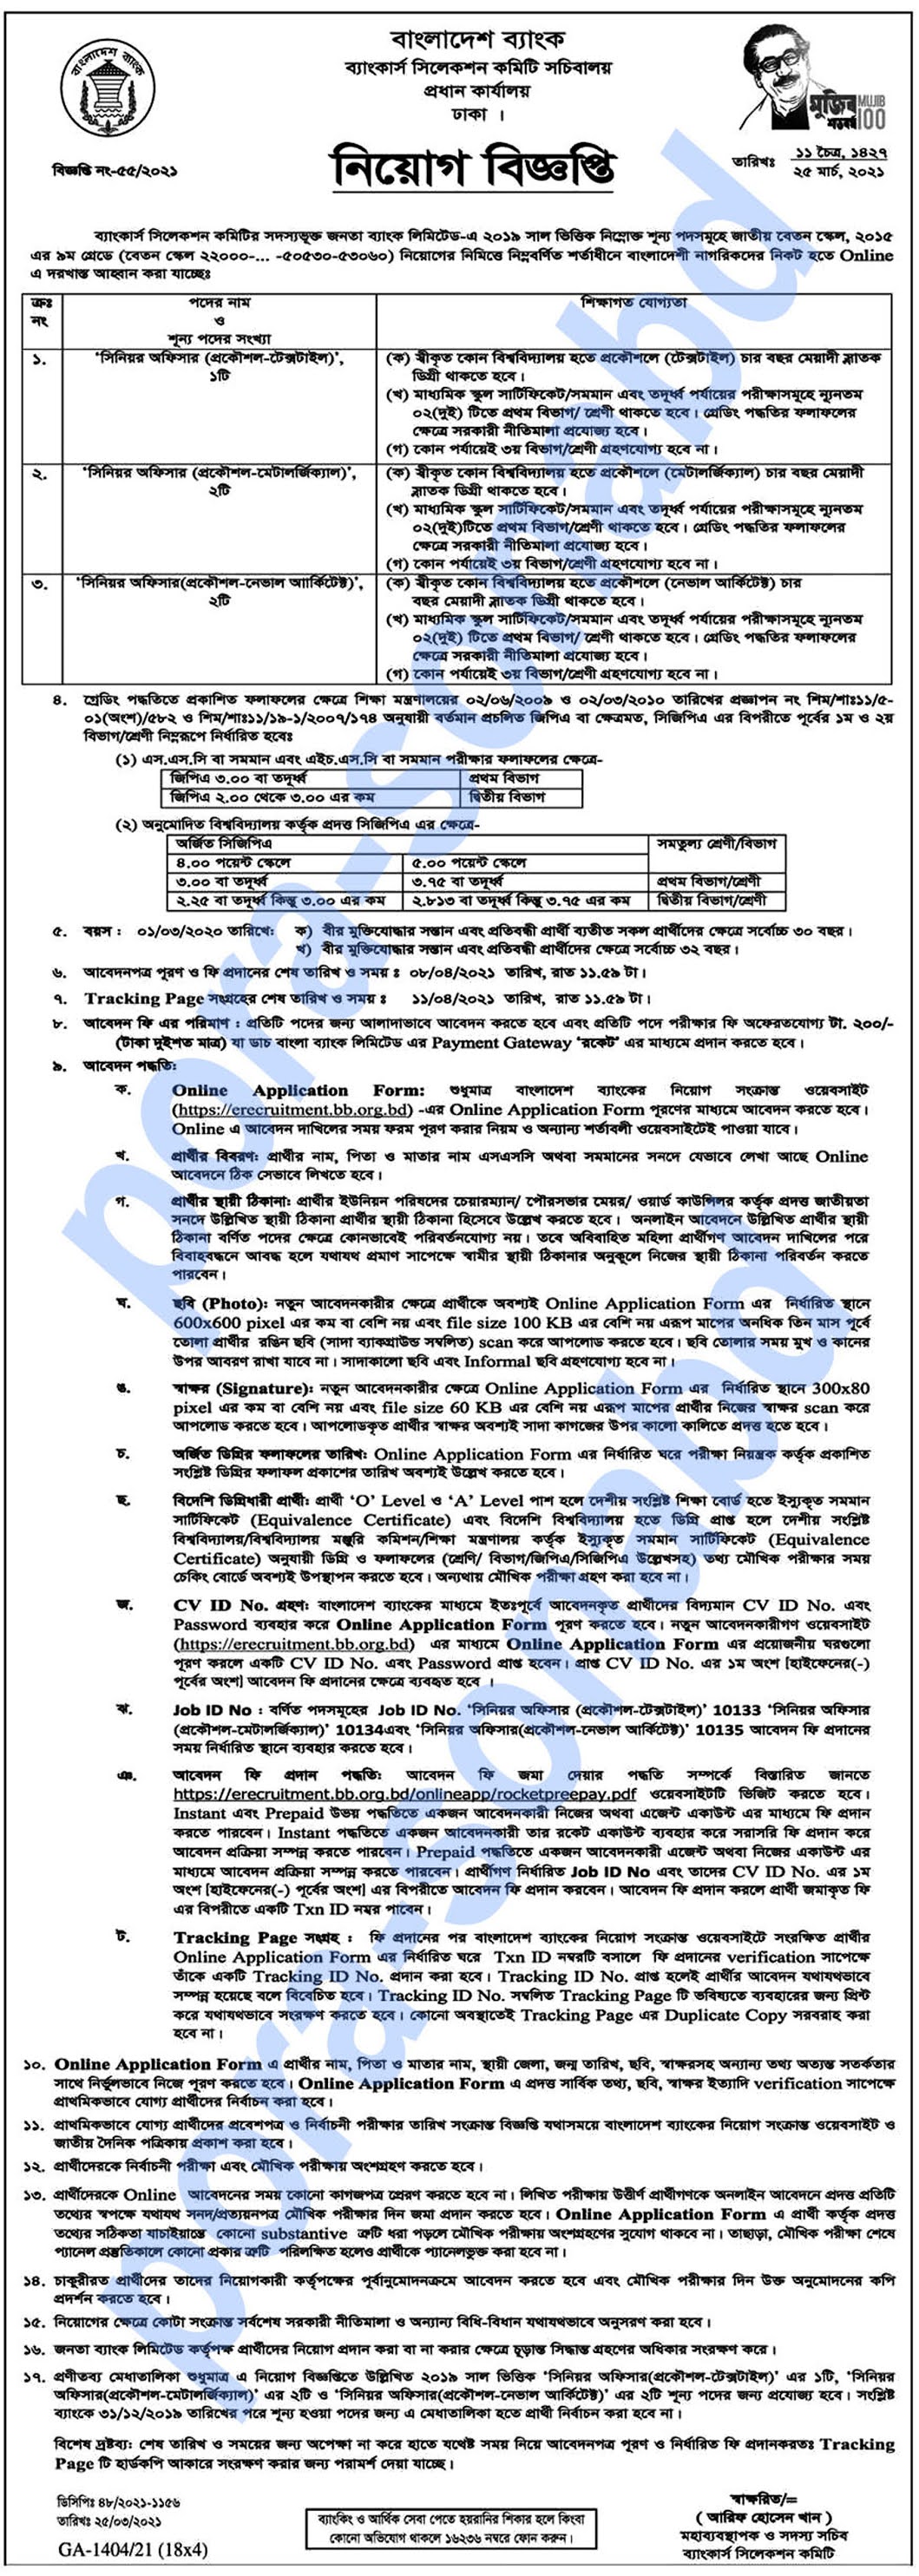 Bangladesh Bank Latest Job Circular 2021